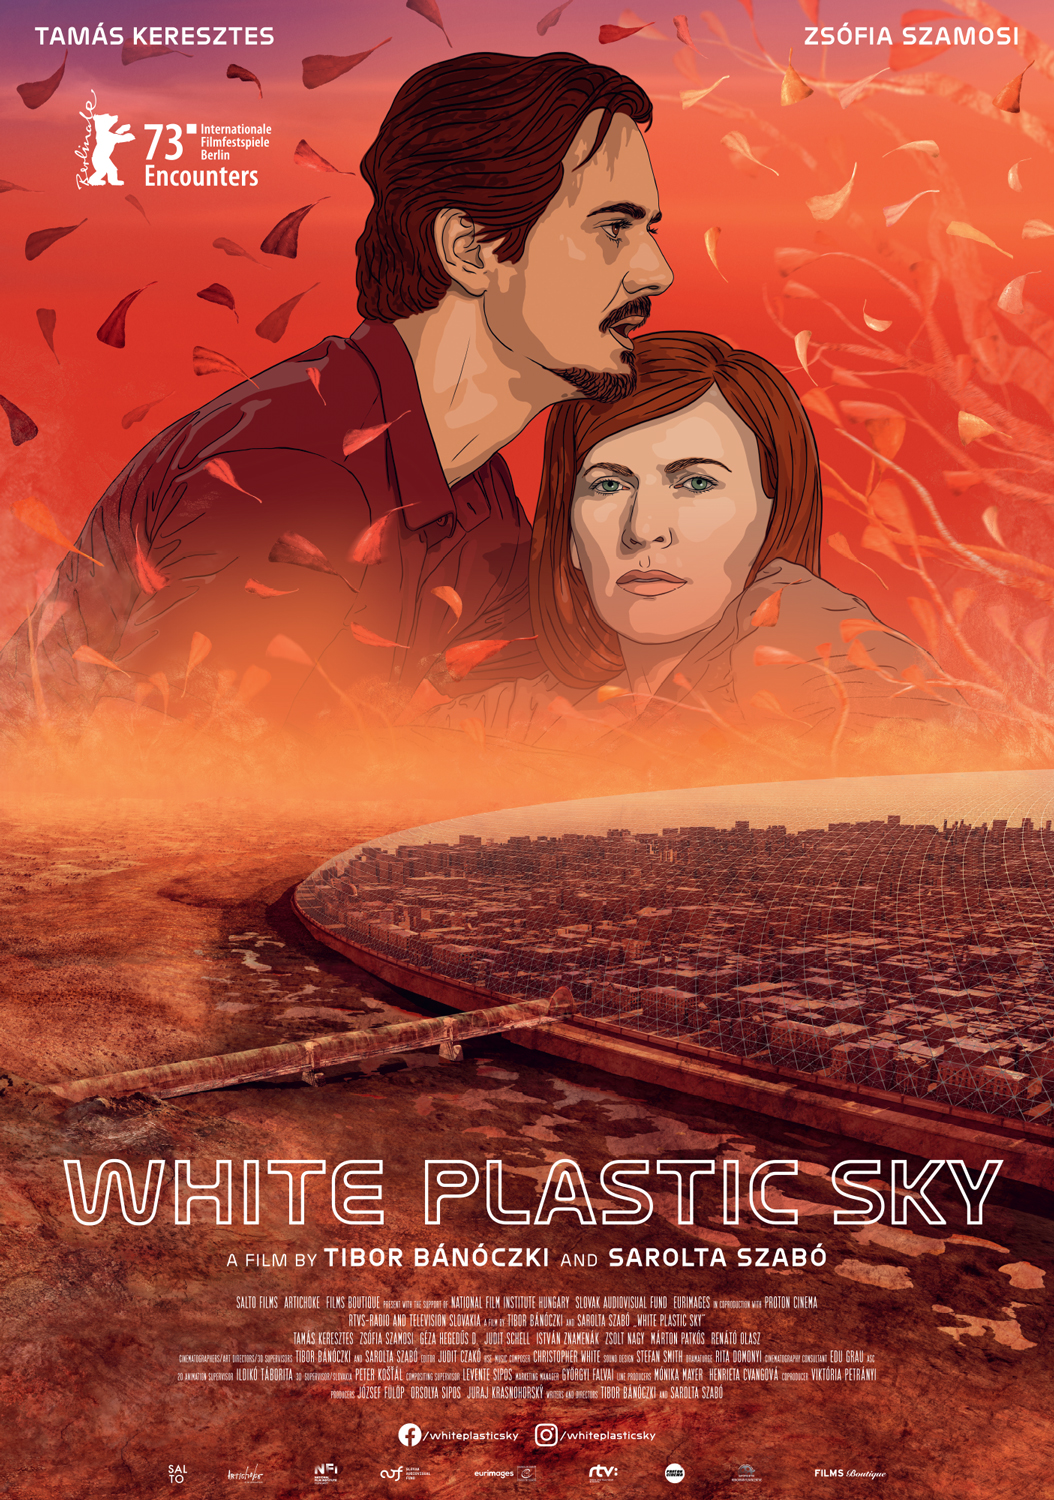 Film screening: White Plastic sky